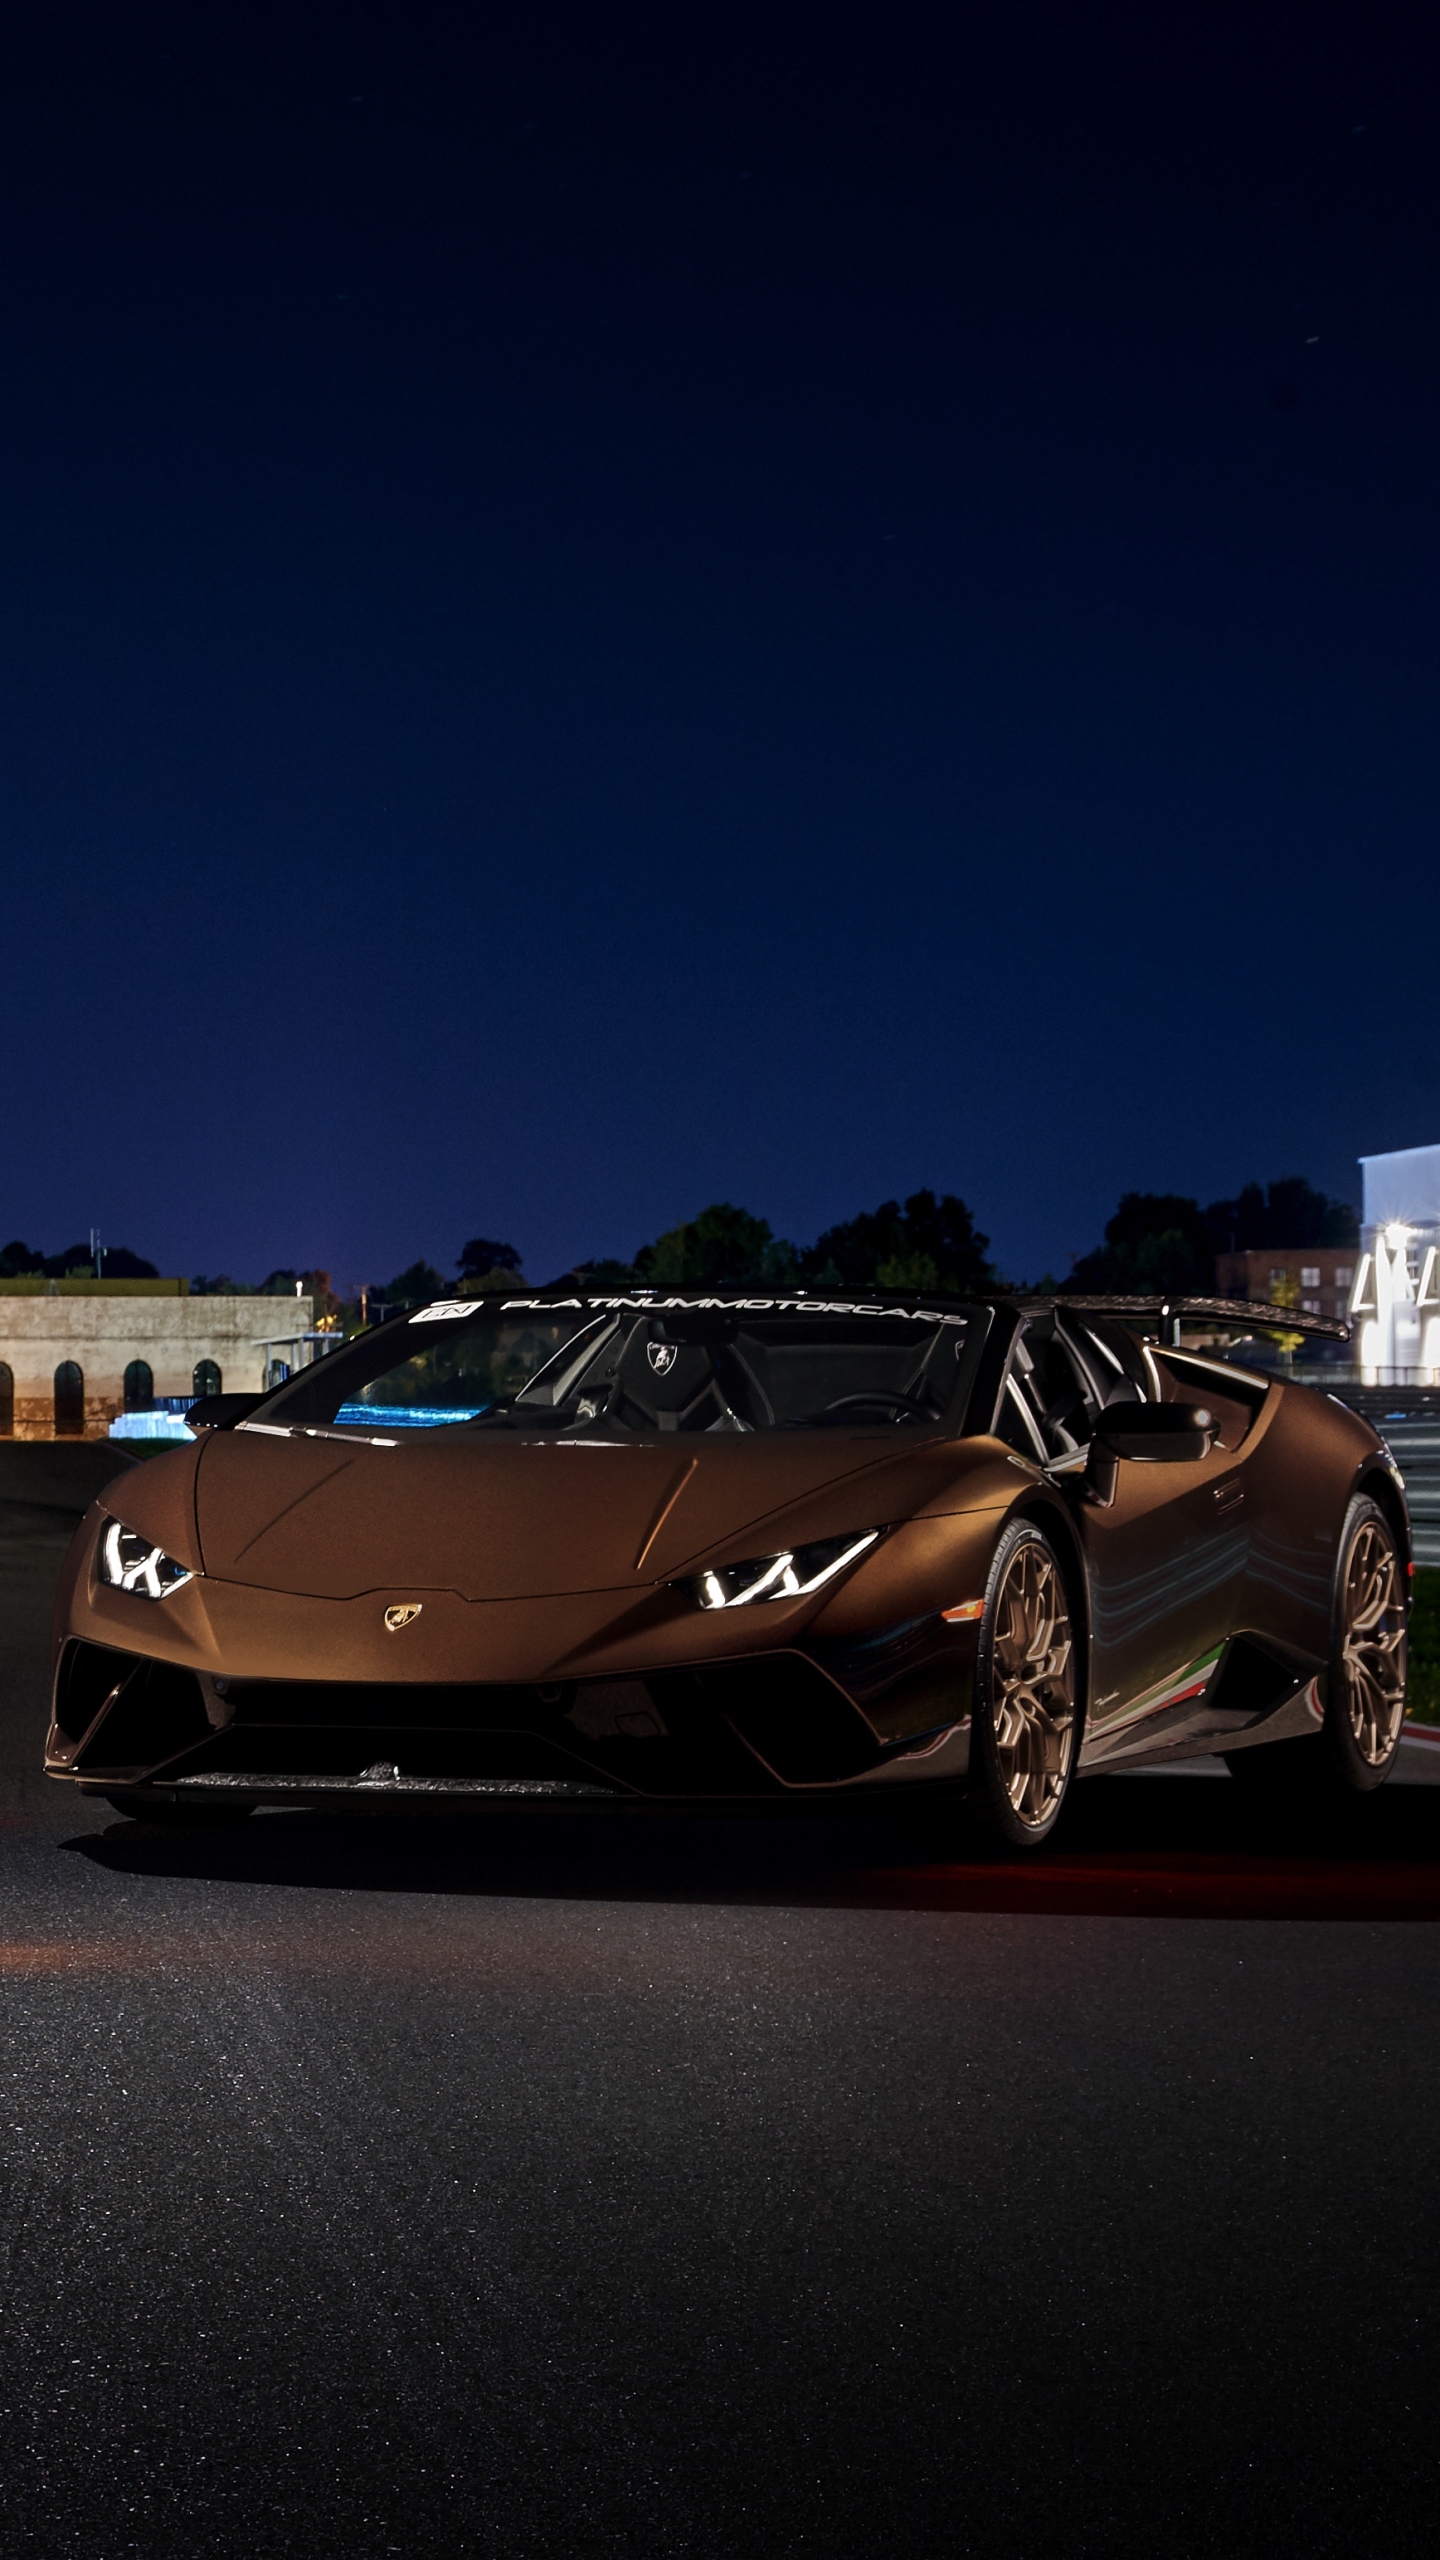 Baixe gratuitamente a imagem Lamborghini, Carro, Super Carro, Lamborghini Huracan, Veículos, Lamborghini Huracán Performance na área de trabalho do seu PC